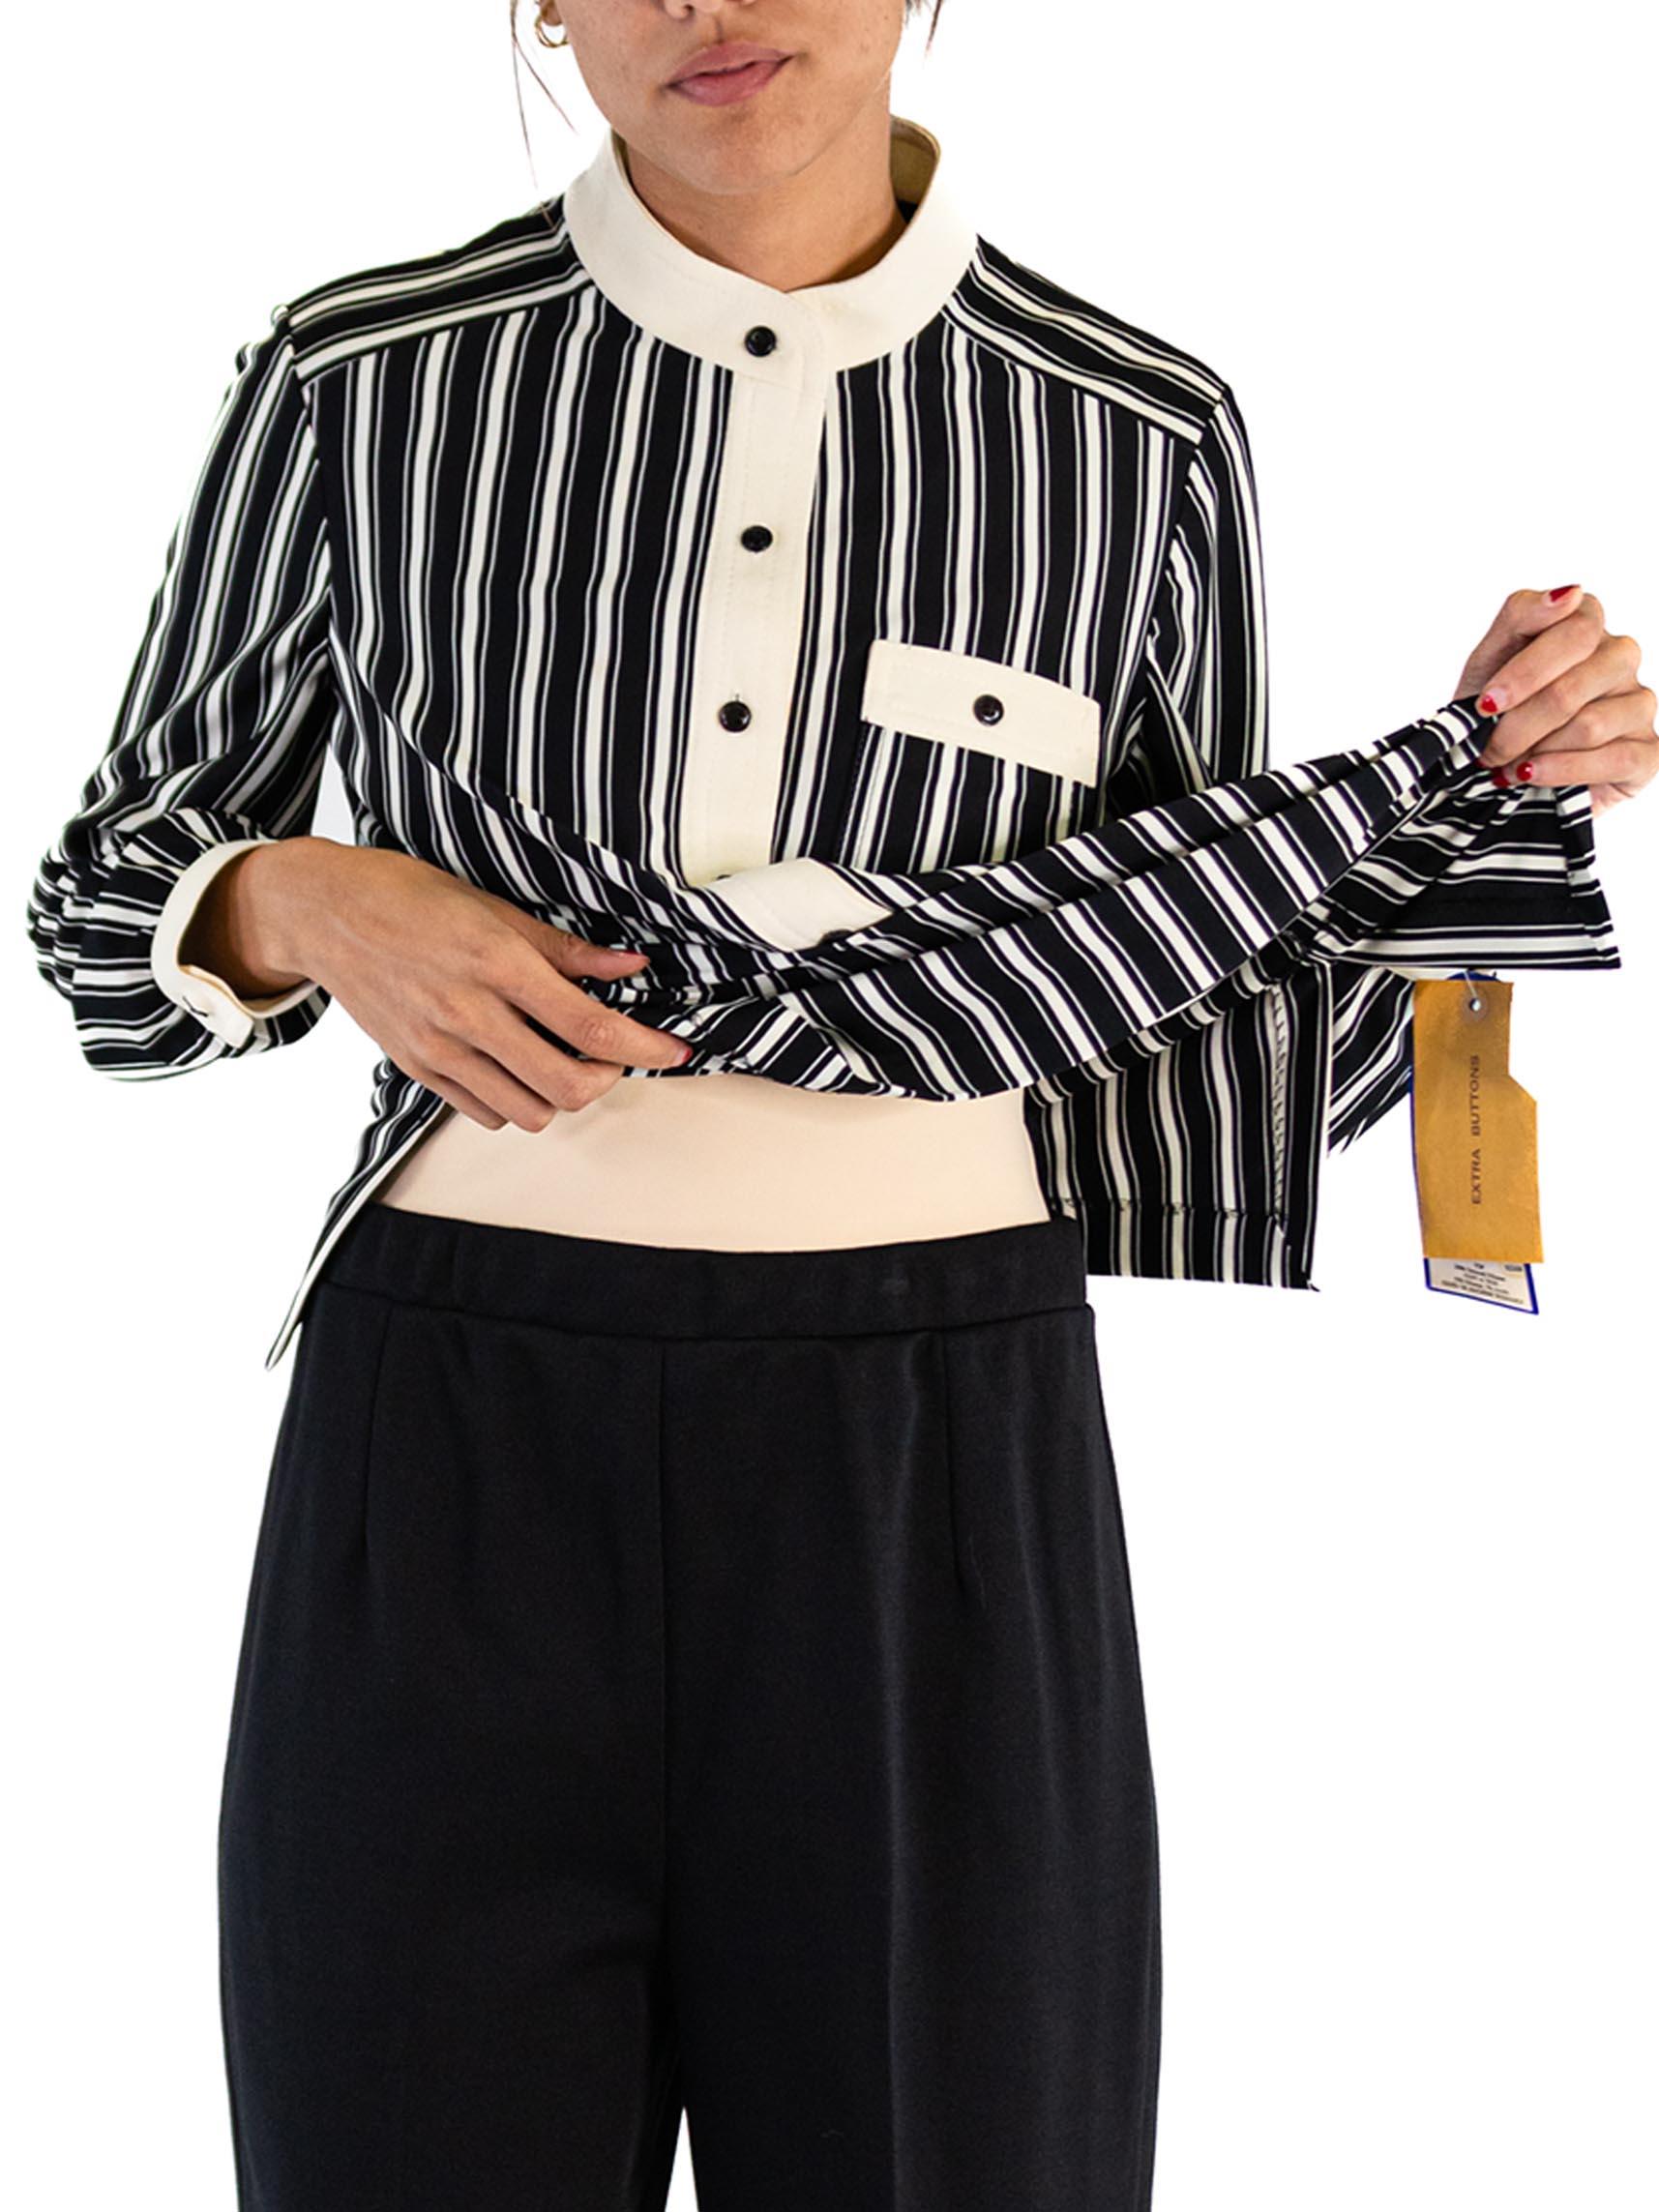 1960S Black & White Striped Polyester Double Knit Mod Shirt Pant Ensemble For Sale 2